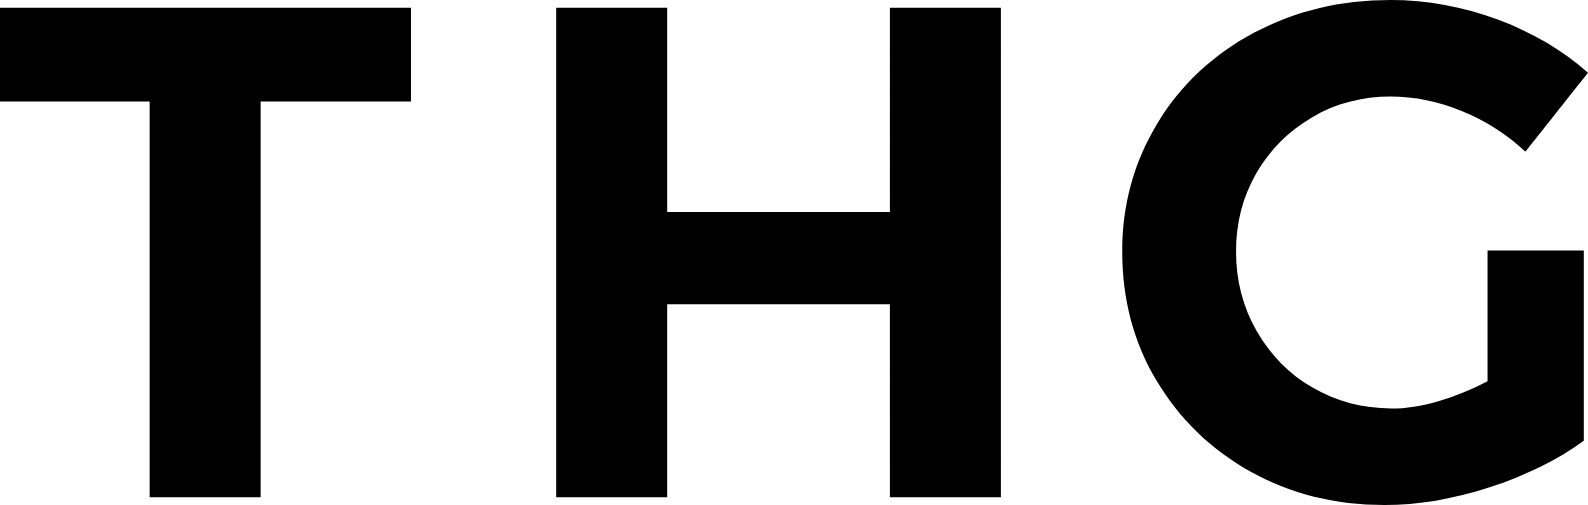 THG (The Hut Group) Logo (transparentes PNG)